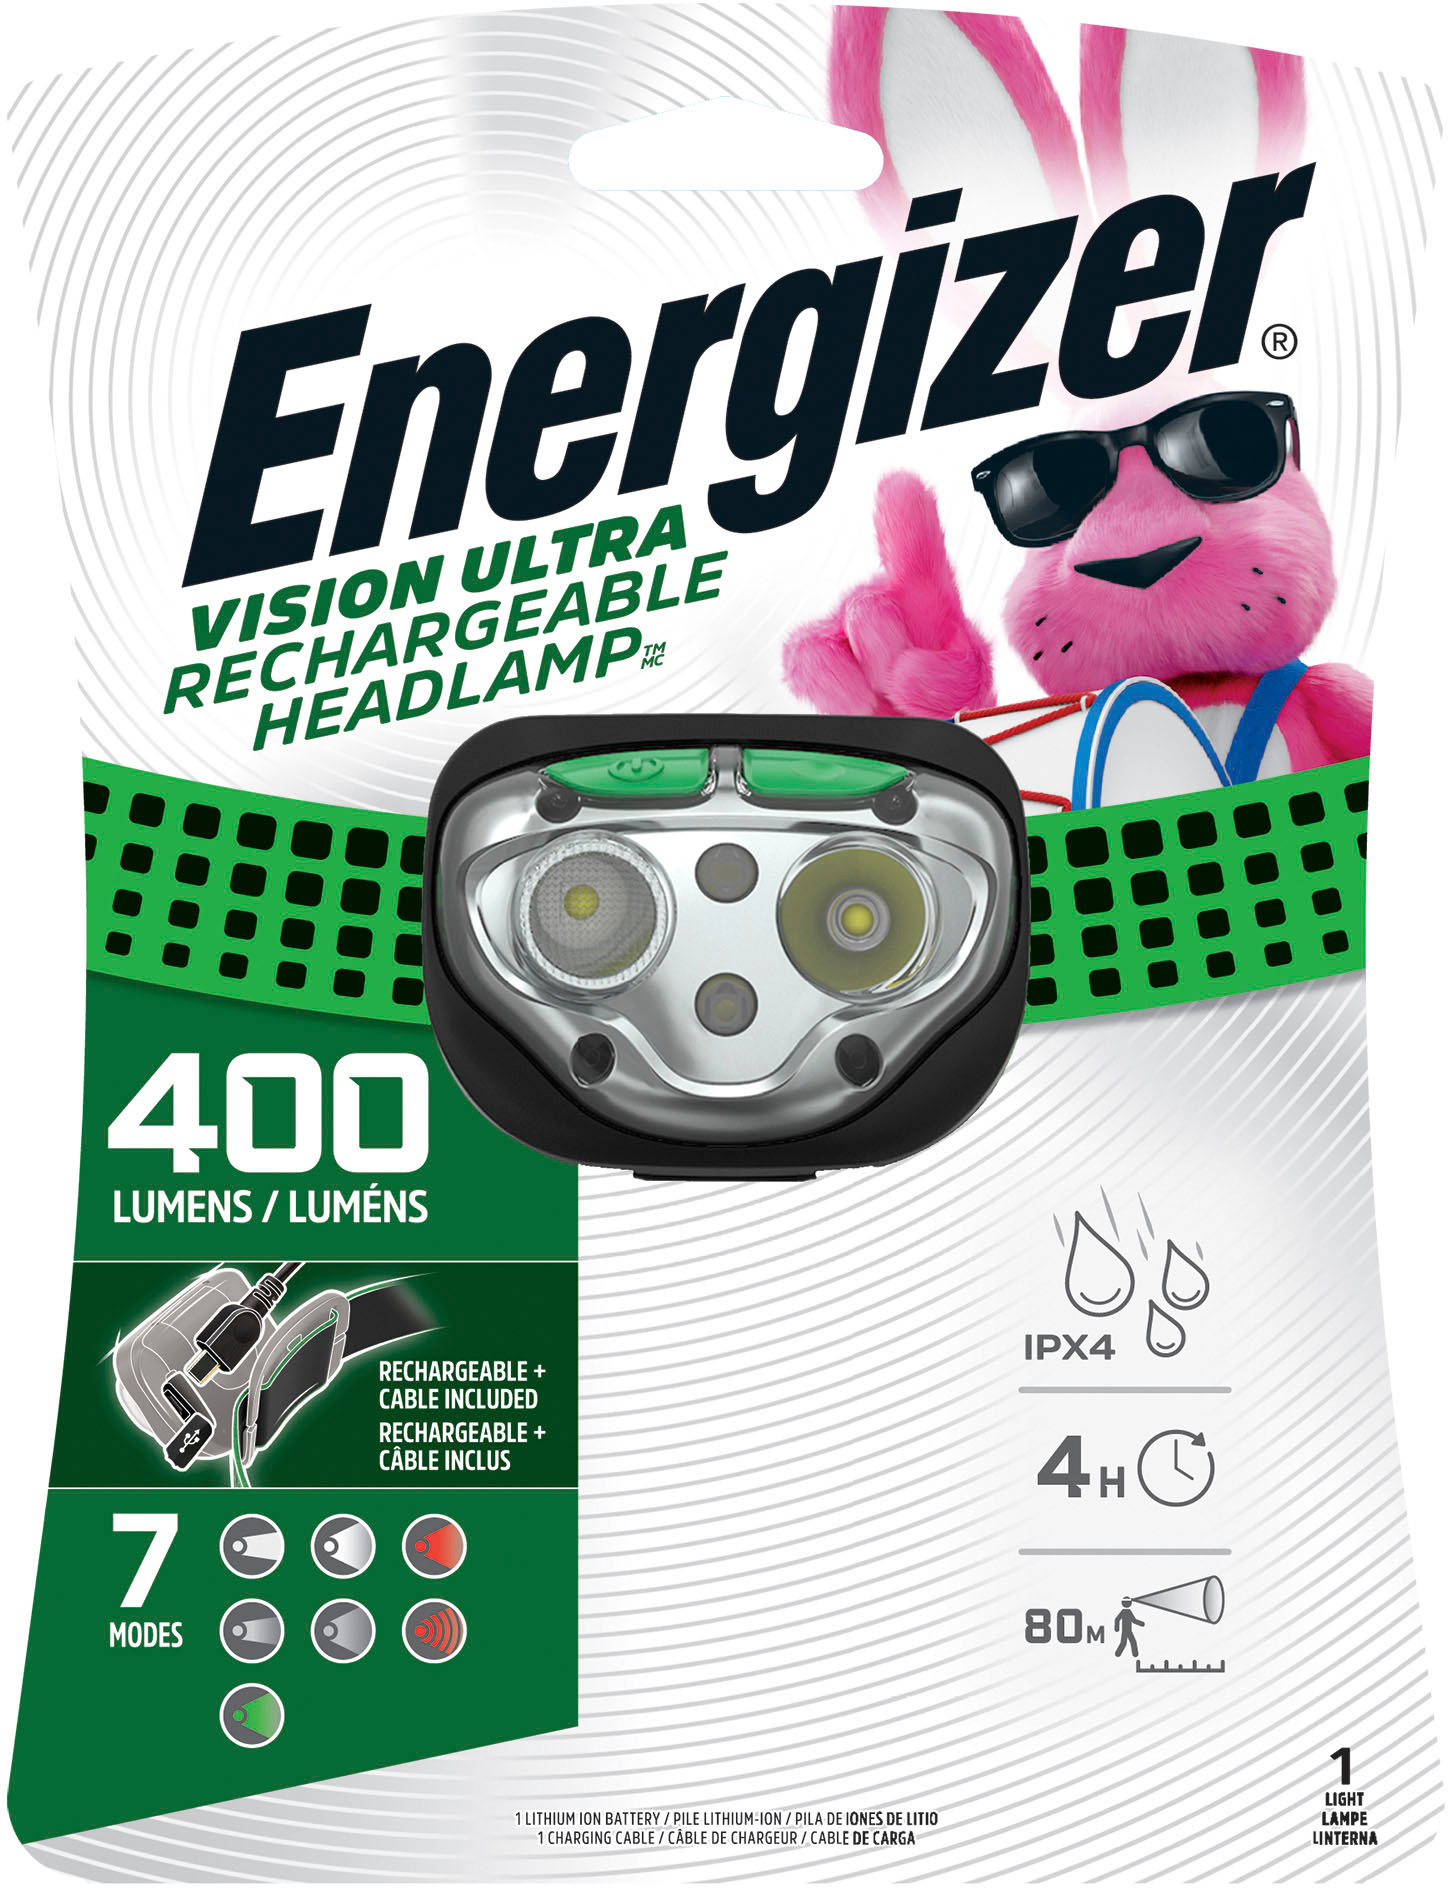 Energizer Vision Recharge LED Lantern - Green